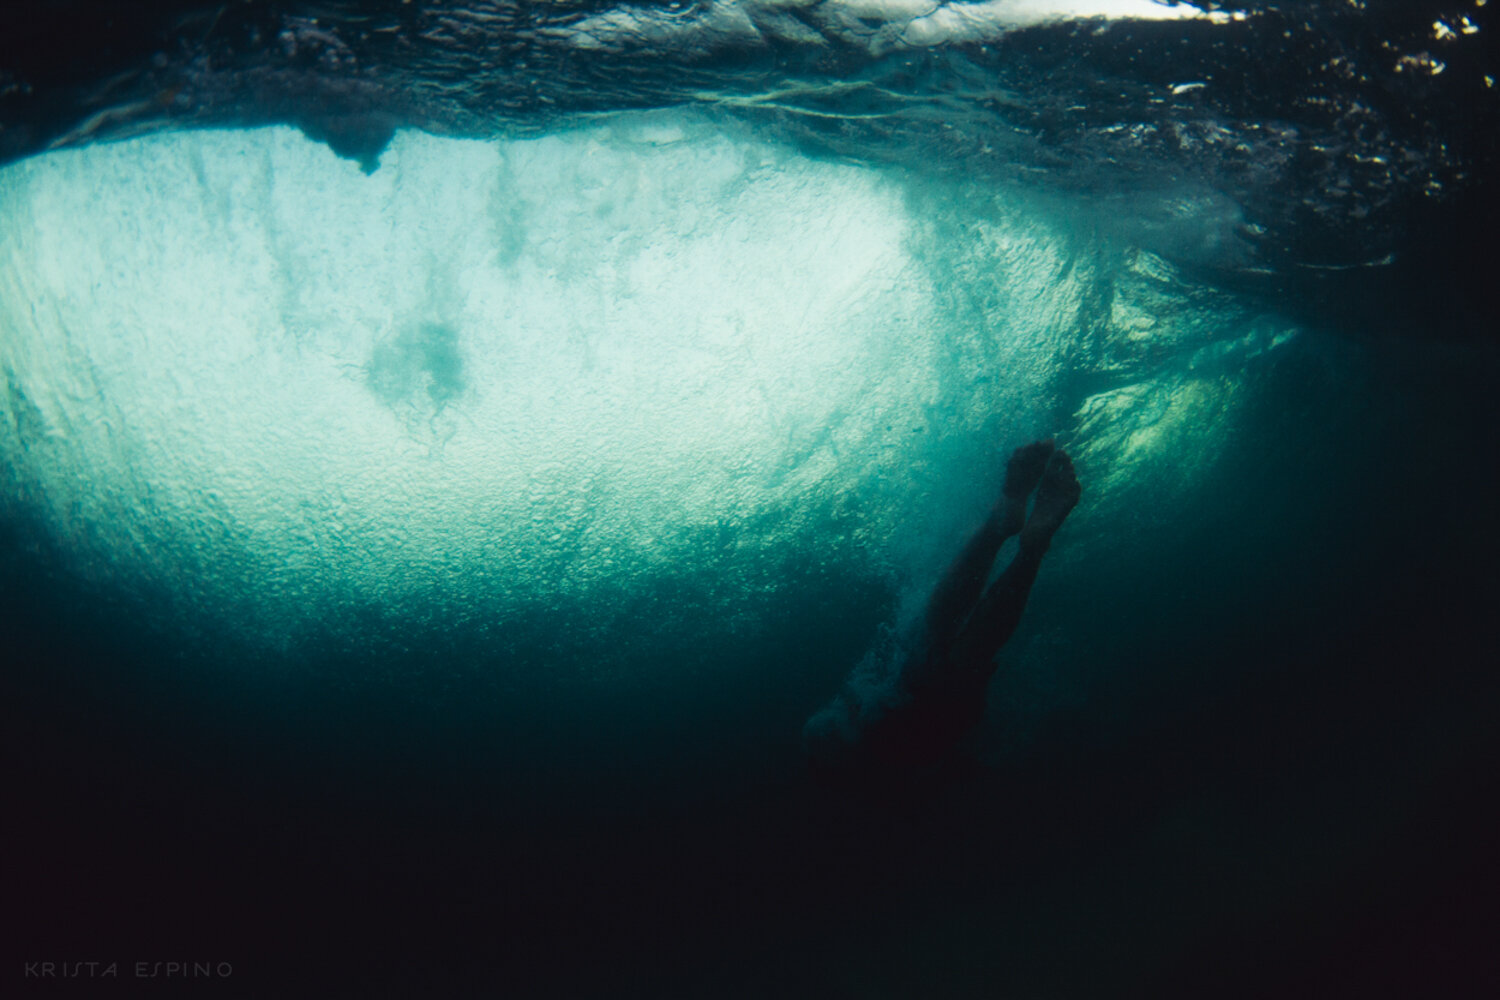 bodysurf waves lifestyle nature photography photographer krista espino travel underwater swim ocean laguna beach_-7.jpg